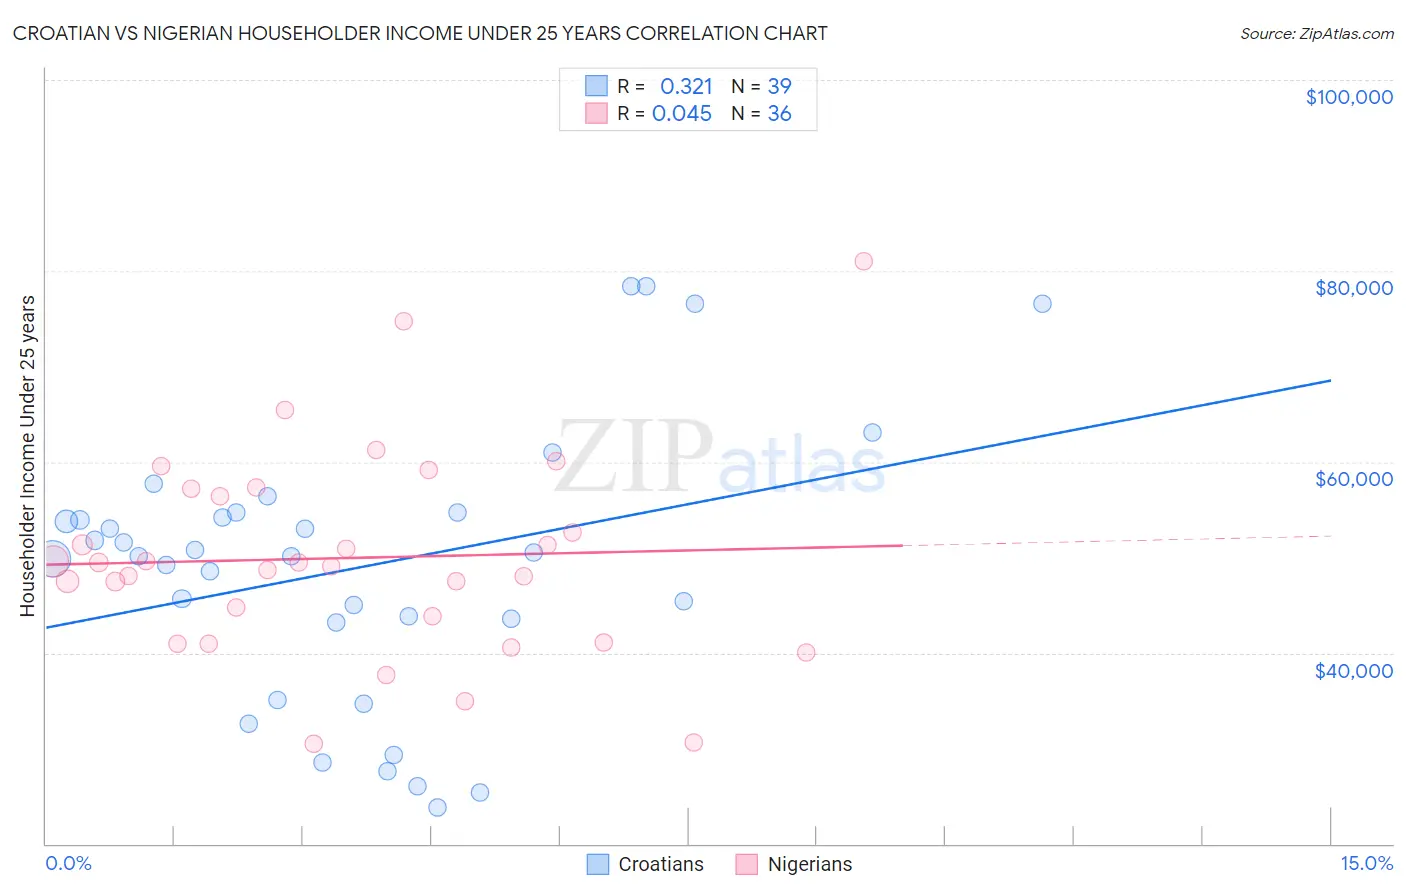 Croatian vs Nigerian Householder Income Under 25 years